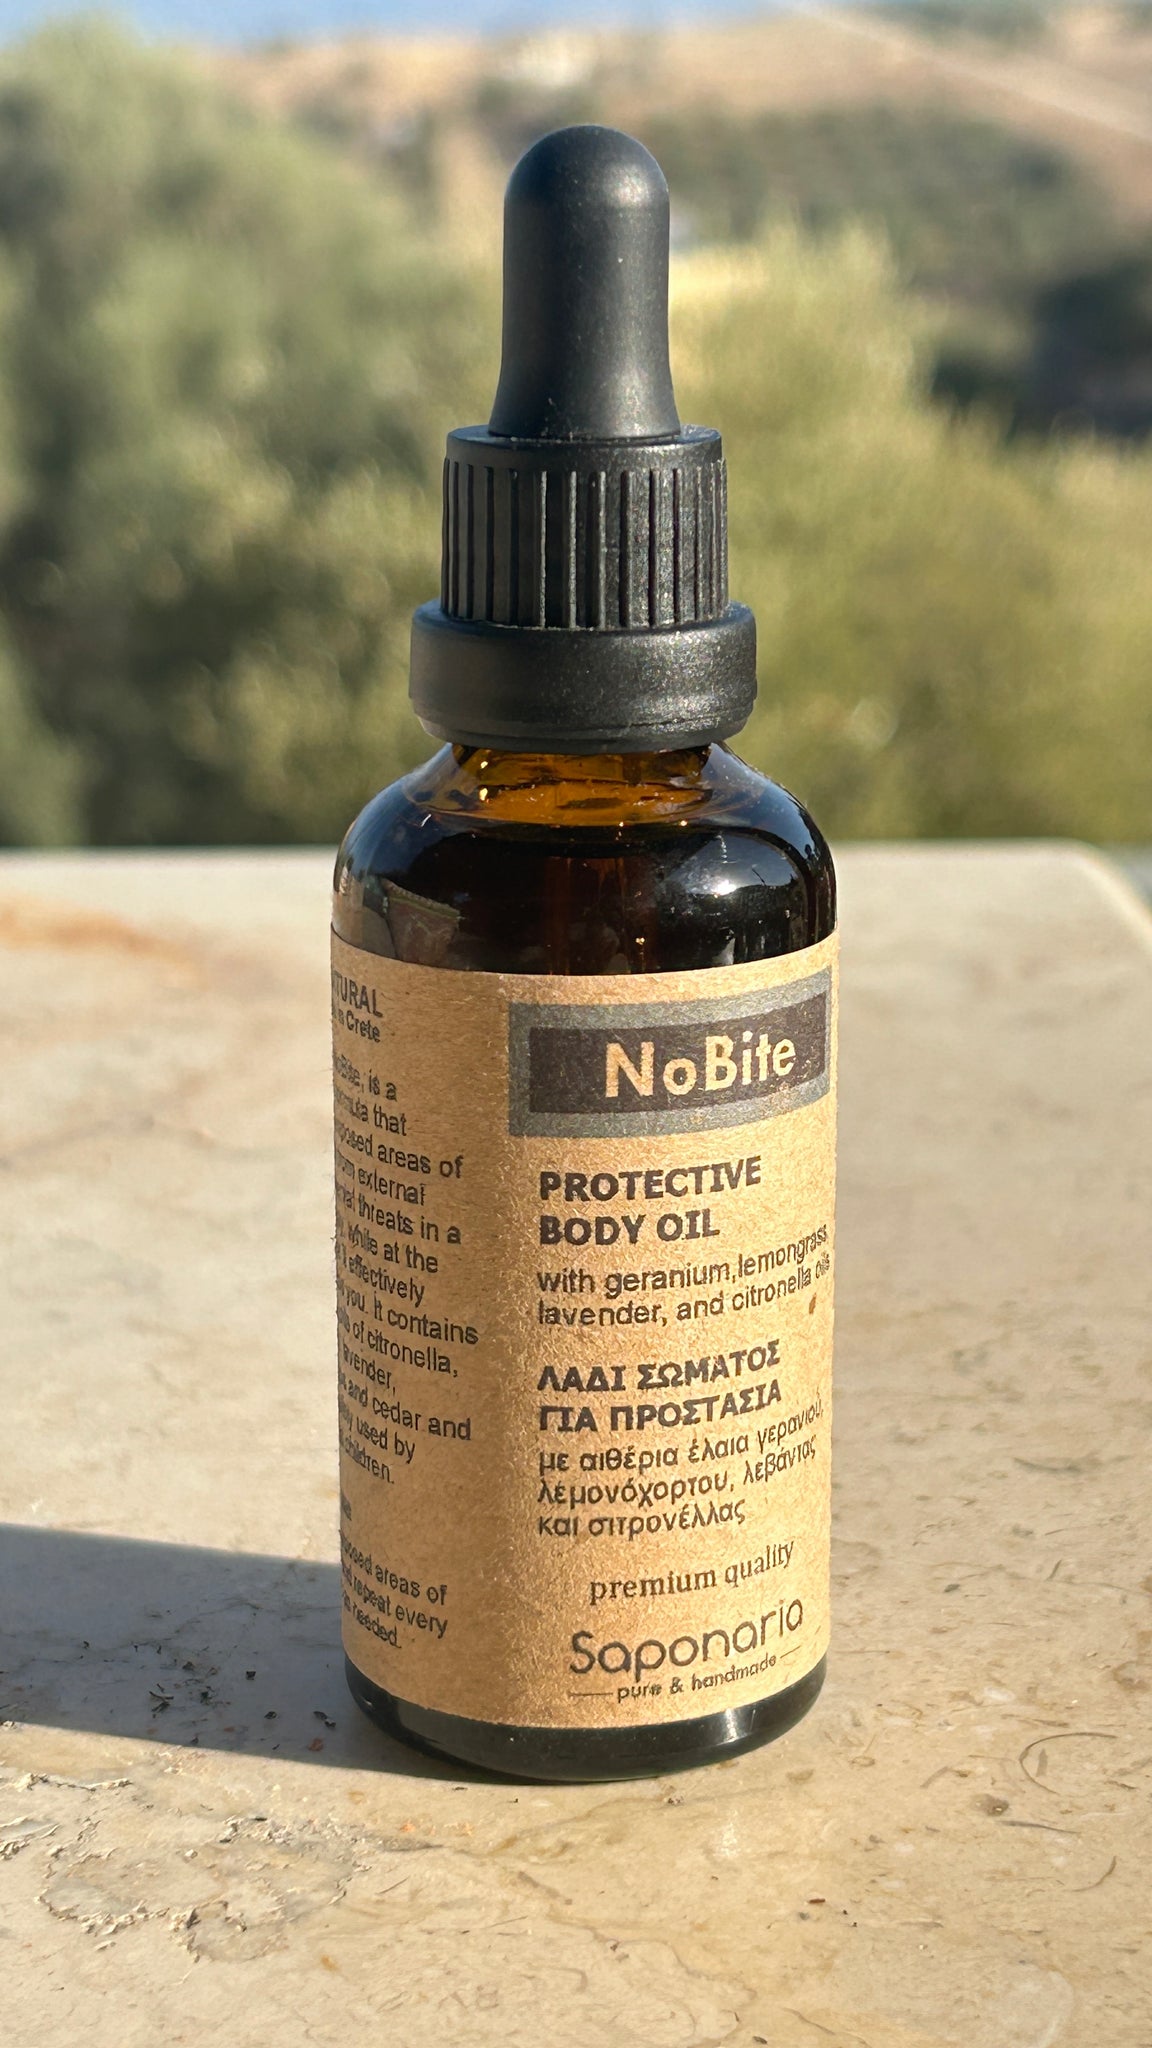 Natural Body Oil "NoBite"